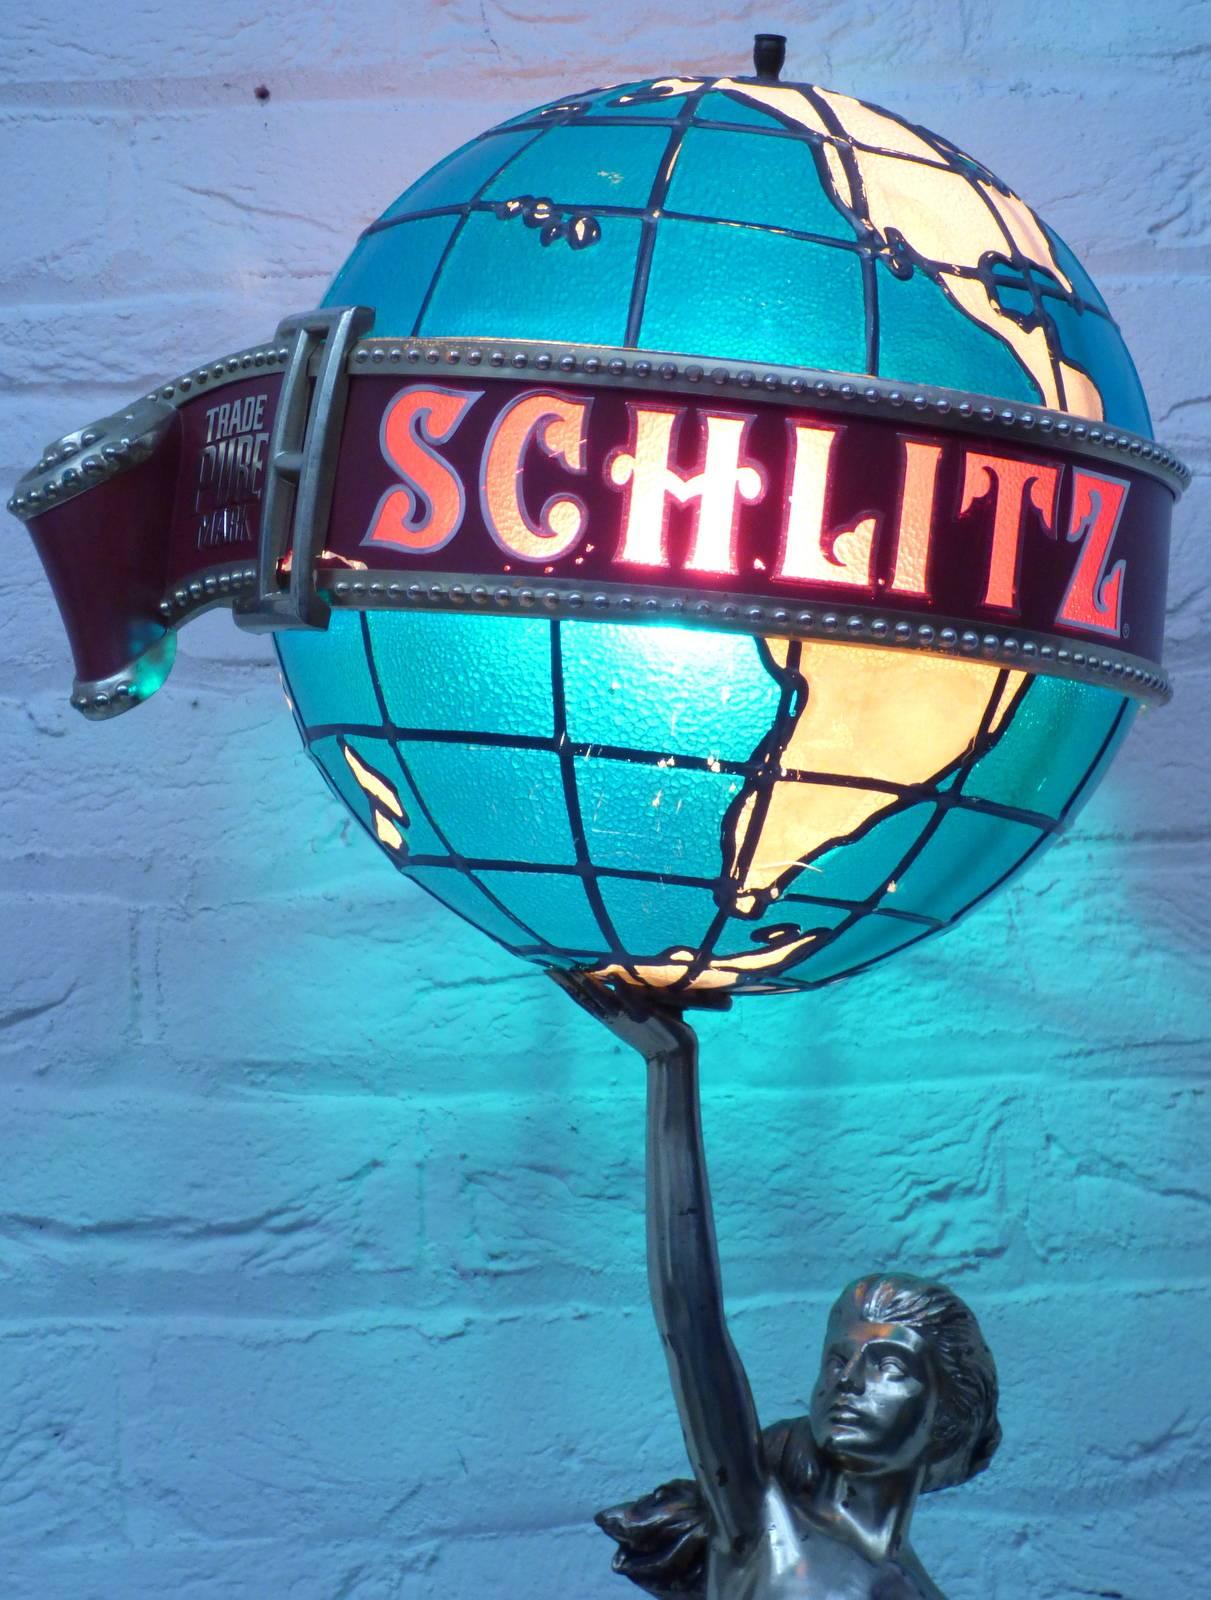 Wonderful merchandising by Schlitz Beer. The statue is in wonderful condition.